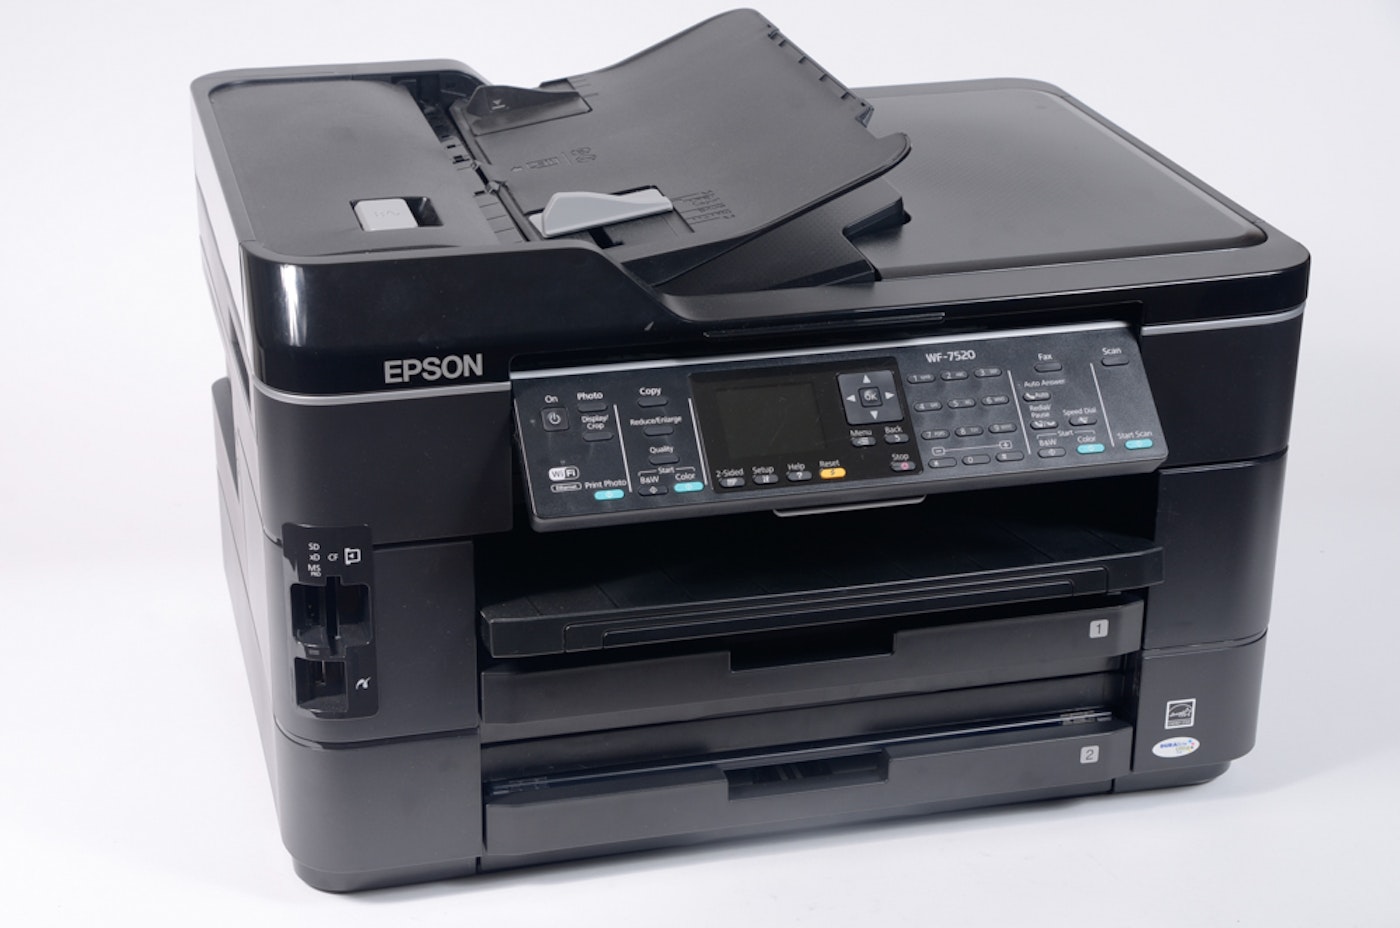 Epson Workforce Wf 7520 All In One Printer Ebth 0589